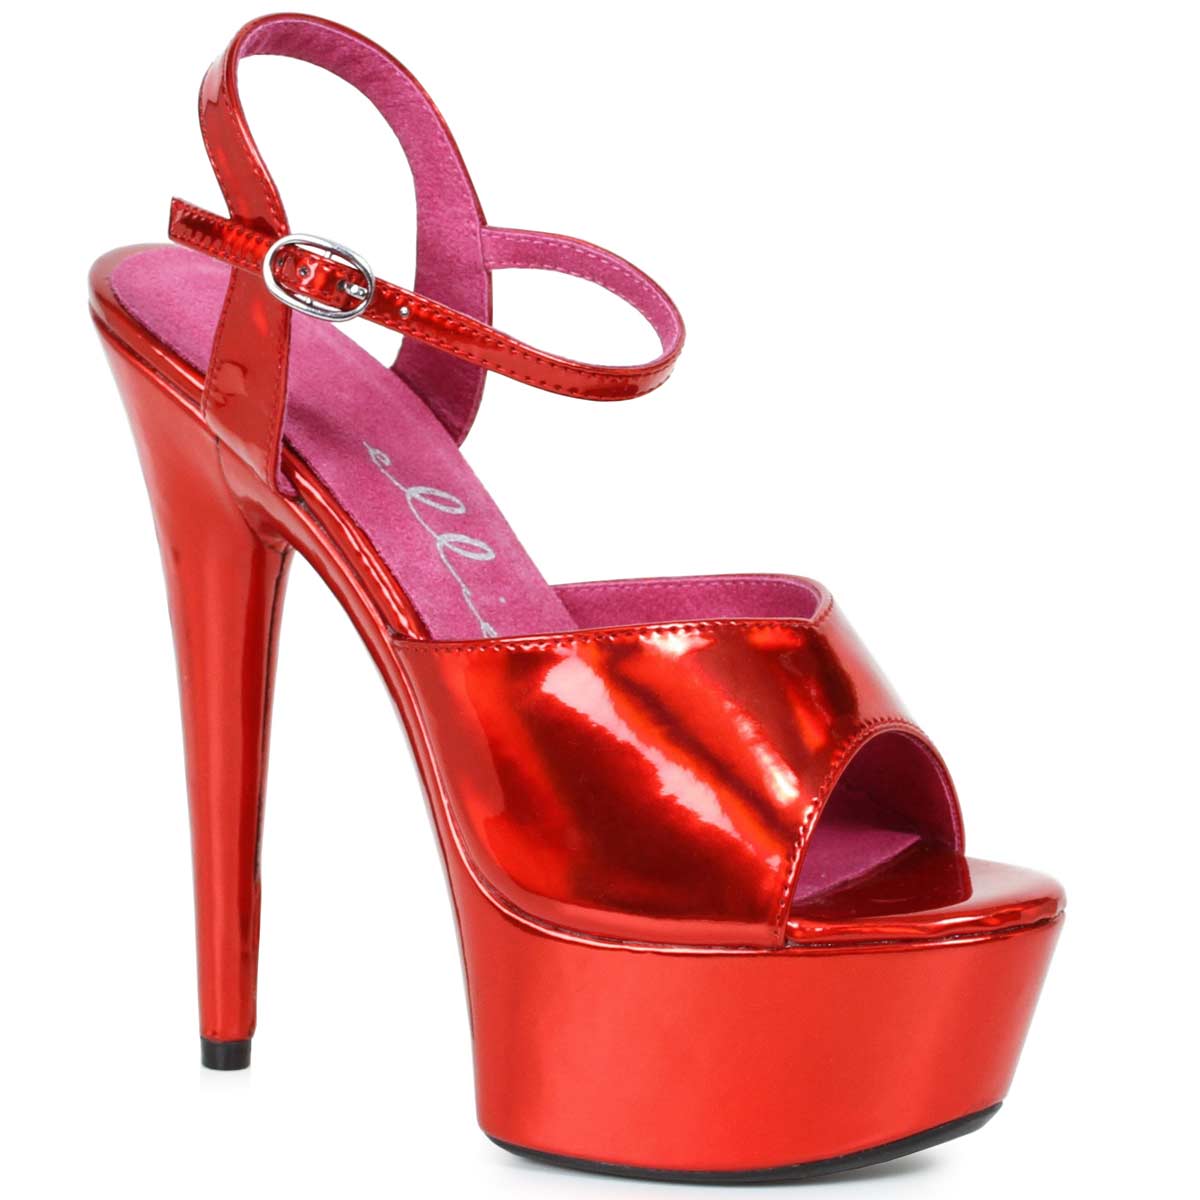 Ellie Shoes 609-LOLA Red in Sexy Heels & Platforms - $80.95